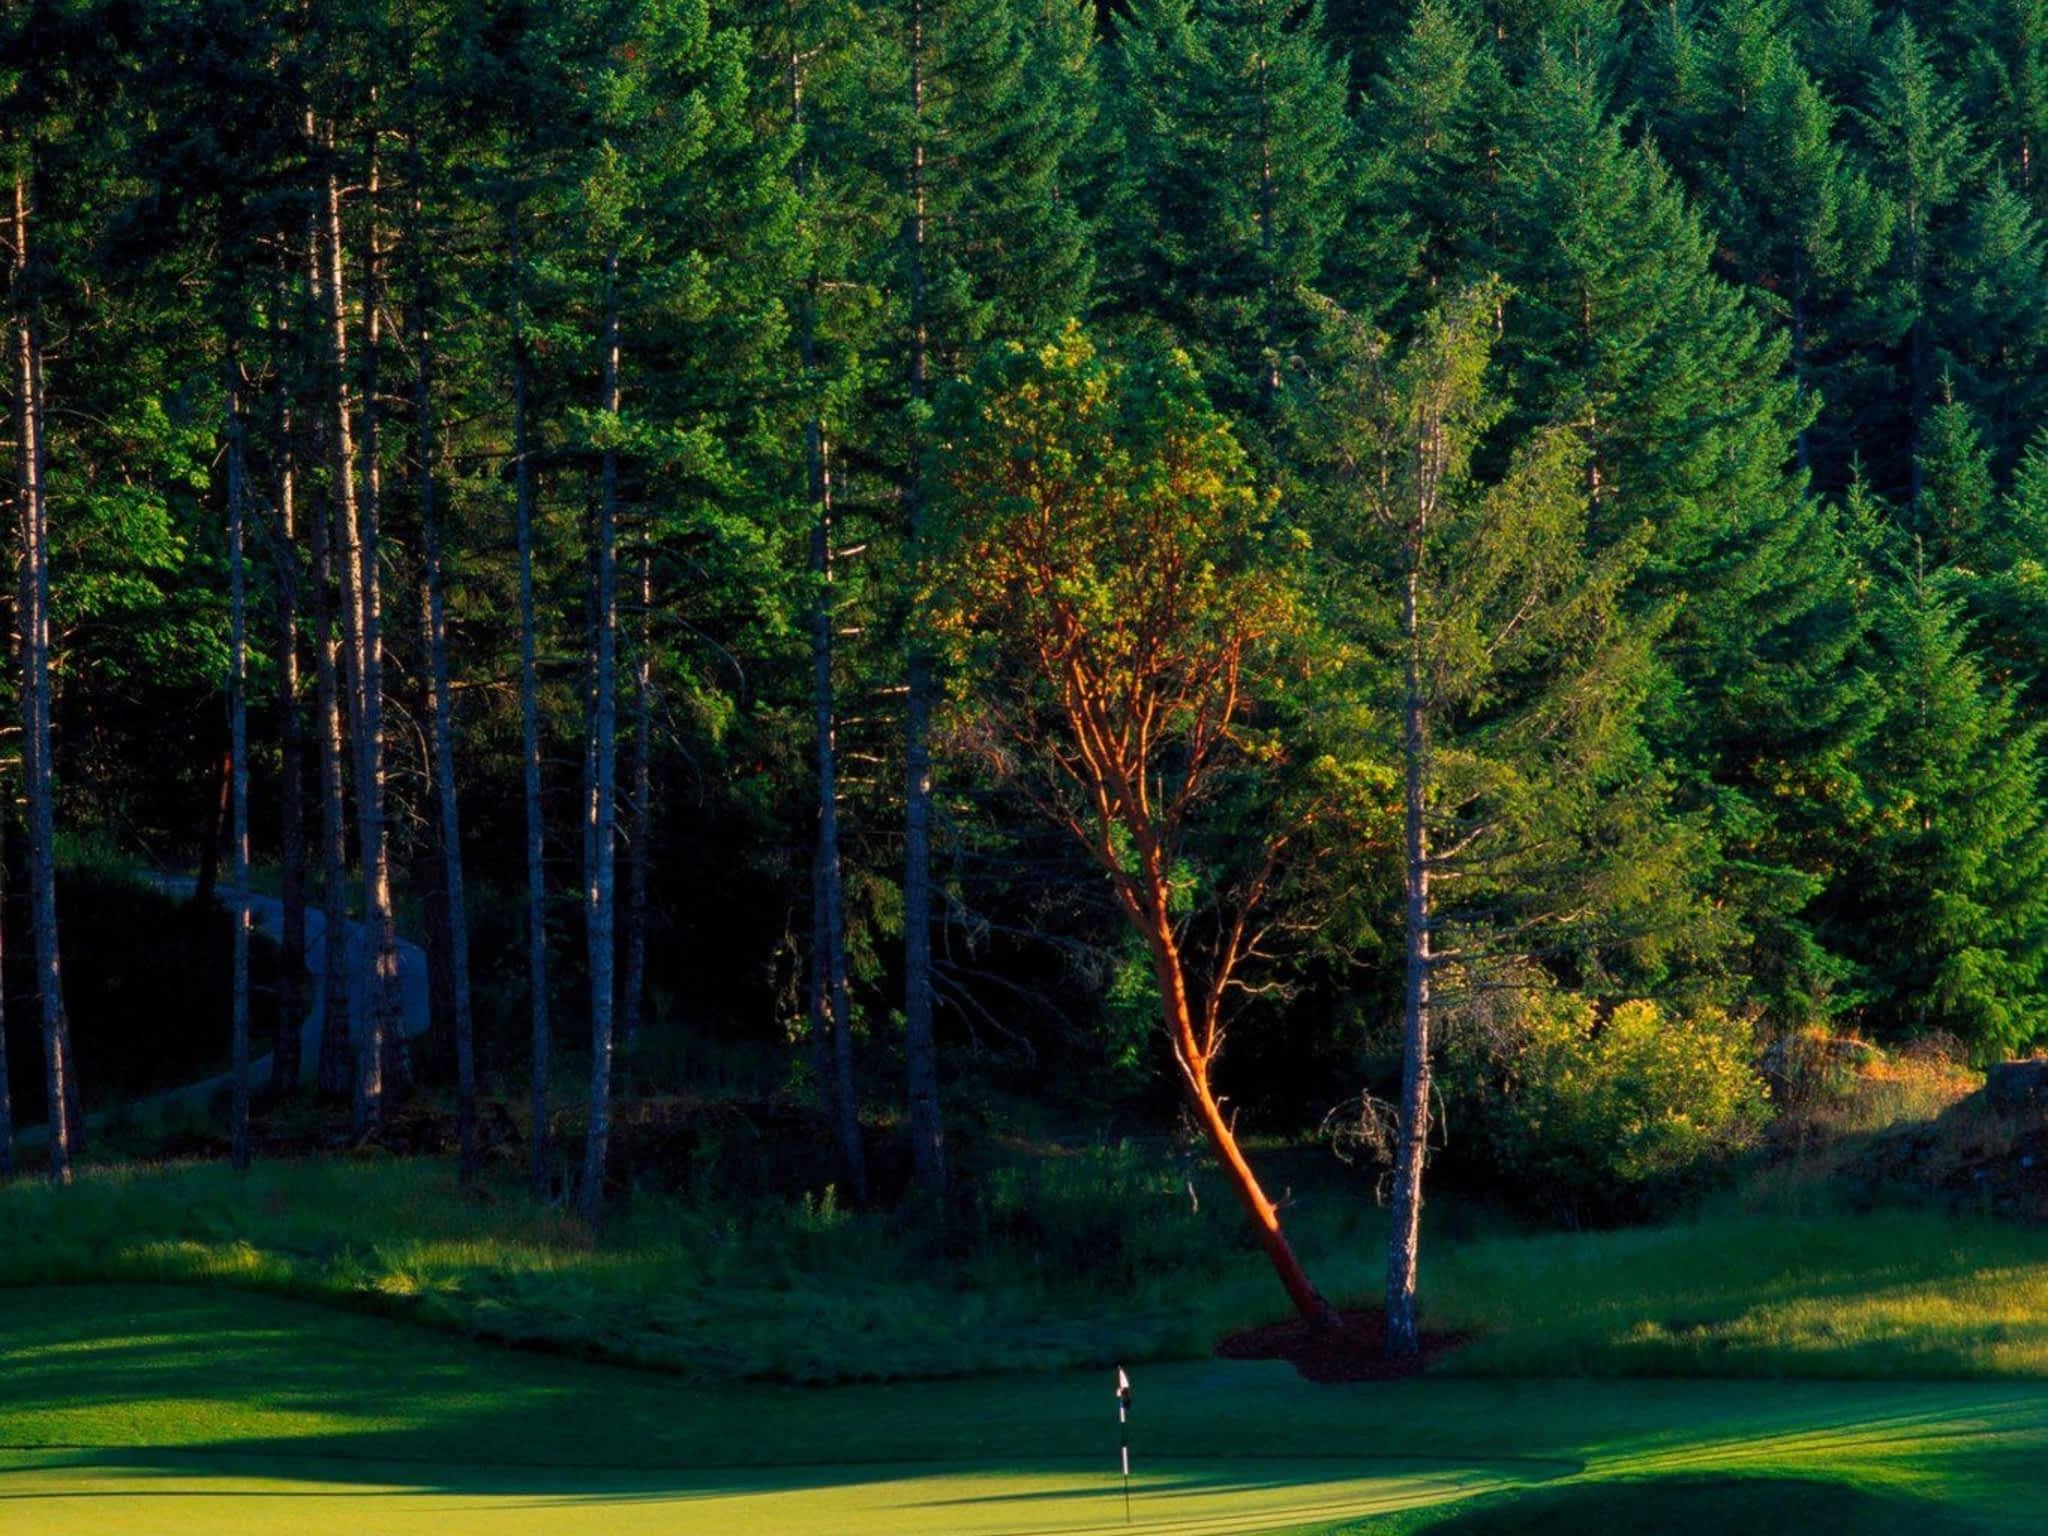 photo The Westin Bear Mountain Golf Resort & Spa, Victoria